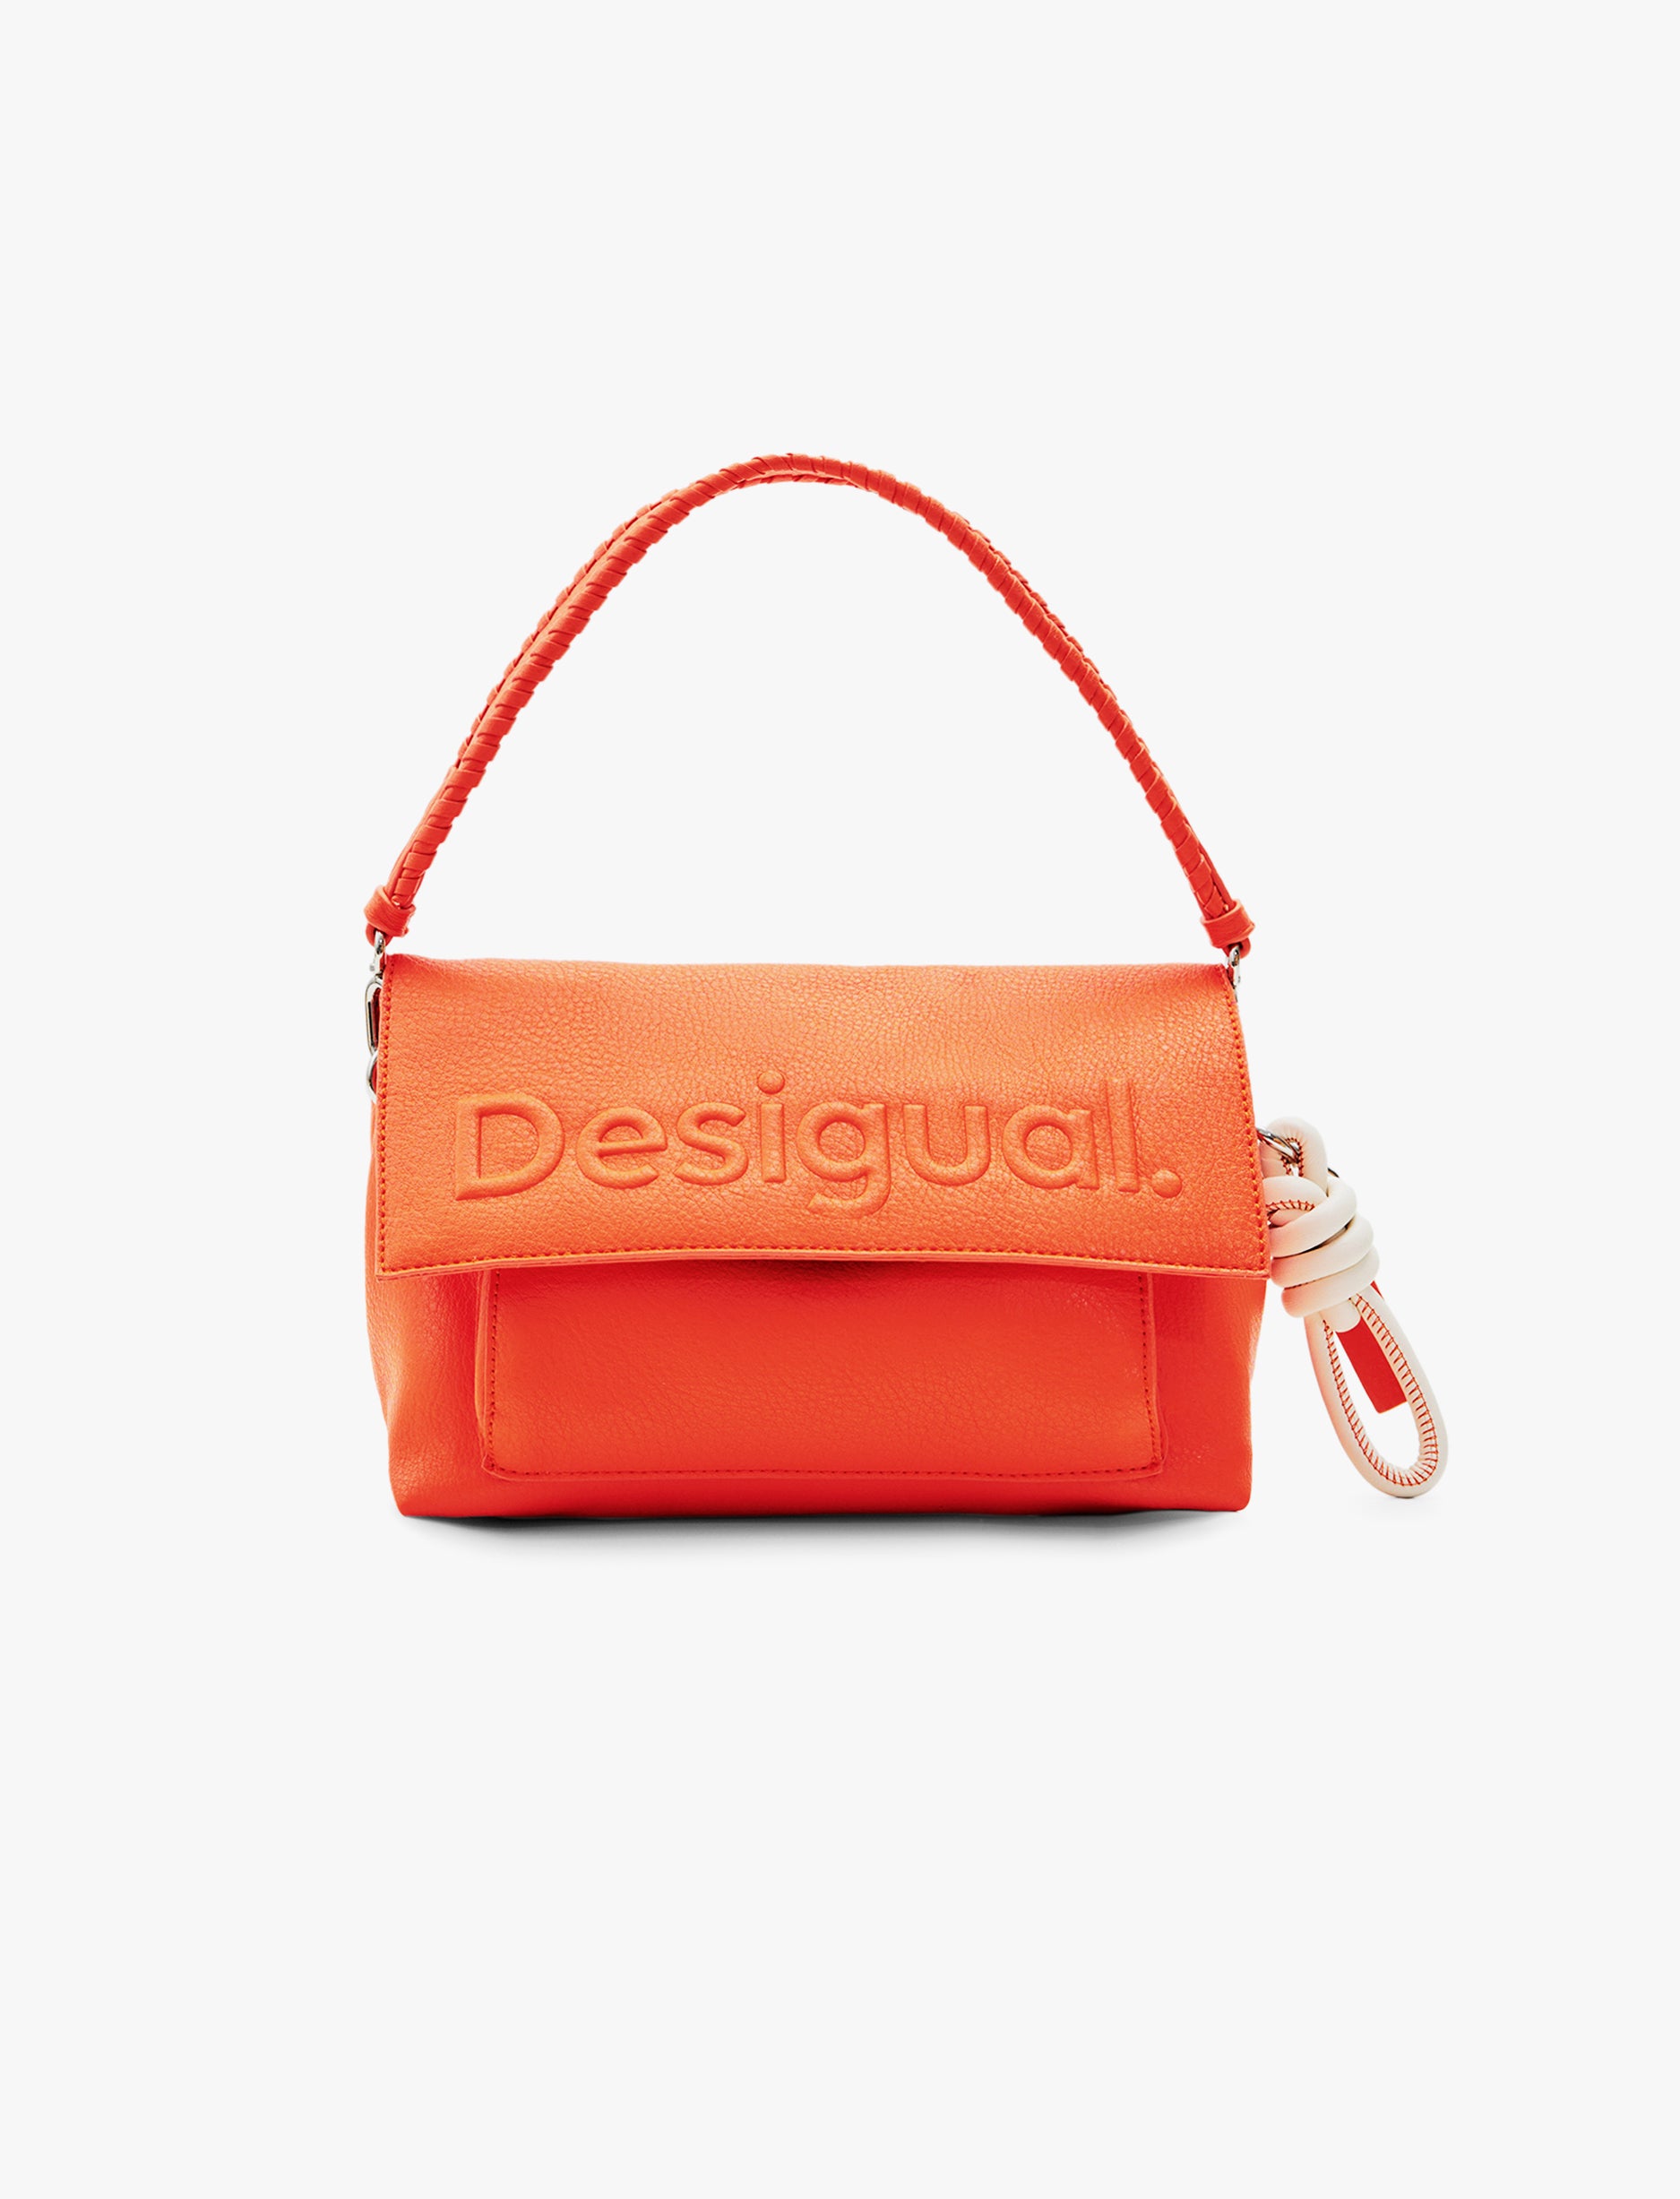 Desigual Bag Half Logo 24 Venecia 2.0 - תיק קרוסבודי בצבע מנדרינה